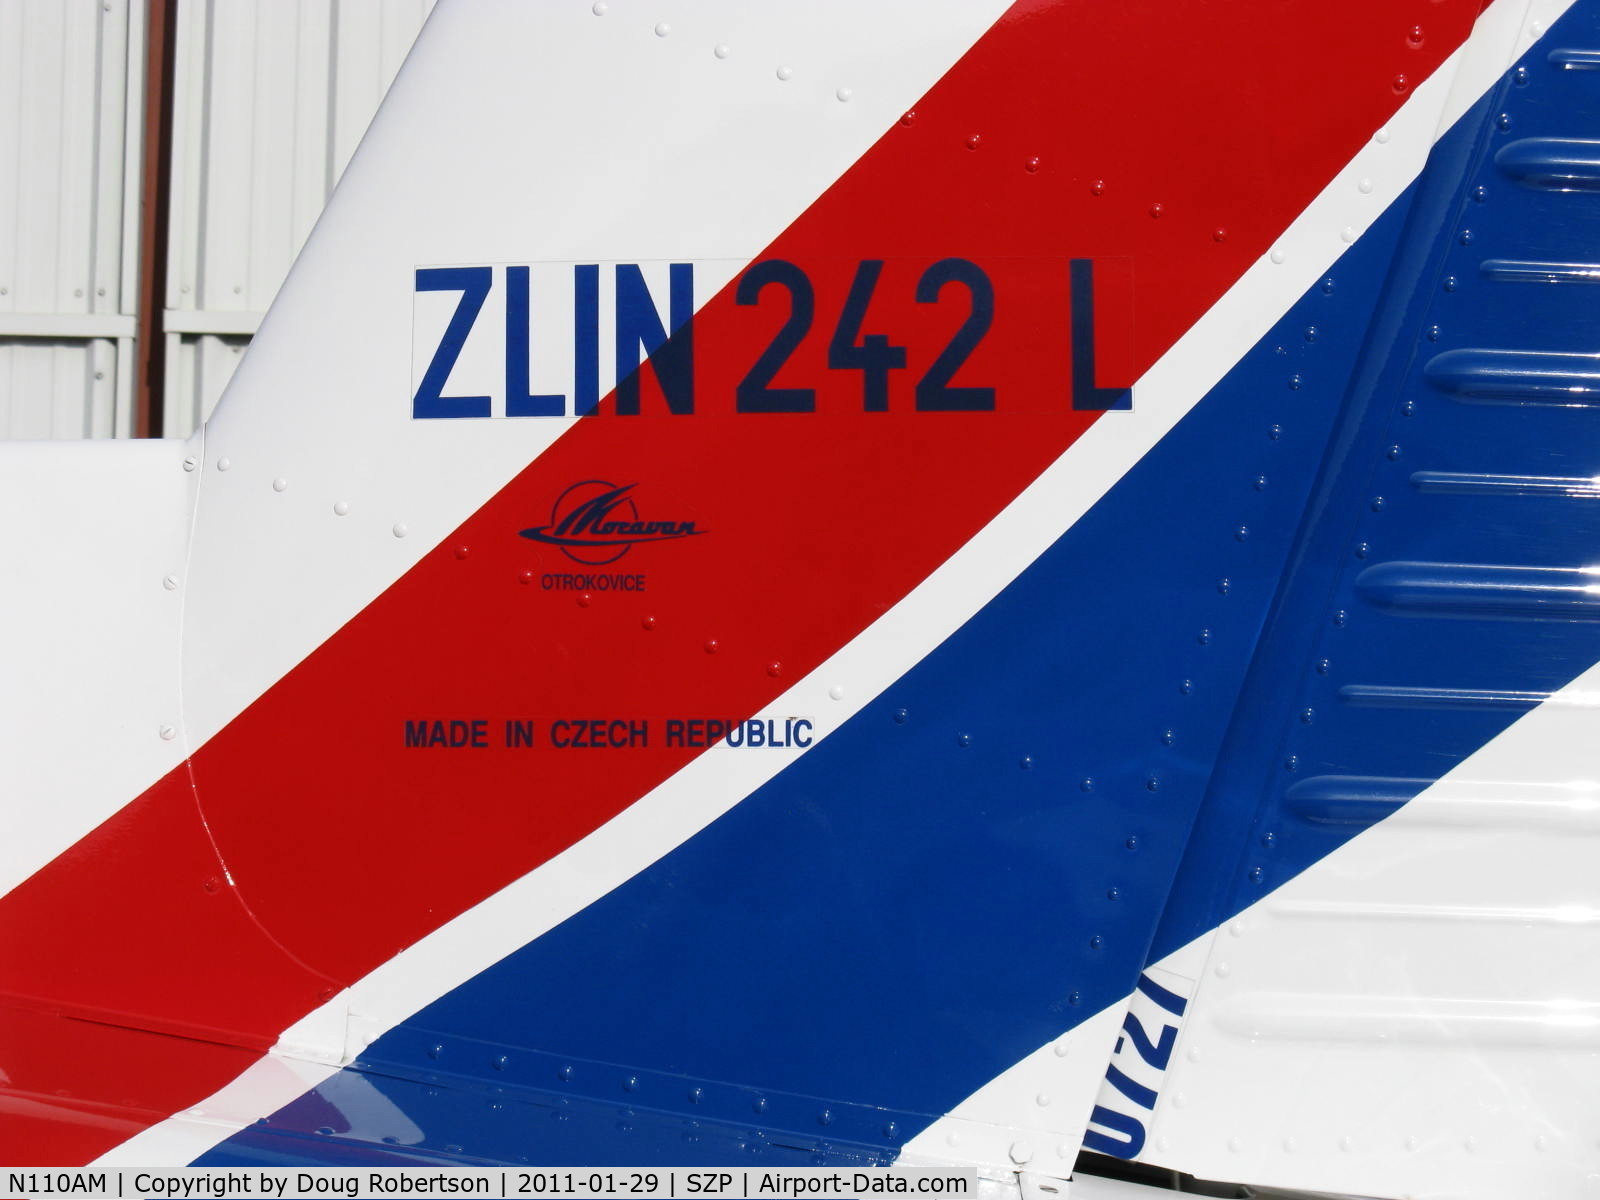 N110AM, 1996 Zlin Z-242L C/N 0727, 1996 Moravan ZLIN 242L, Lycoming AEIO-360-B 200 Hp full inverted flight systems, tail data